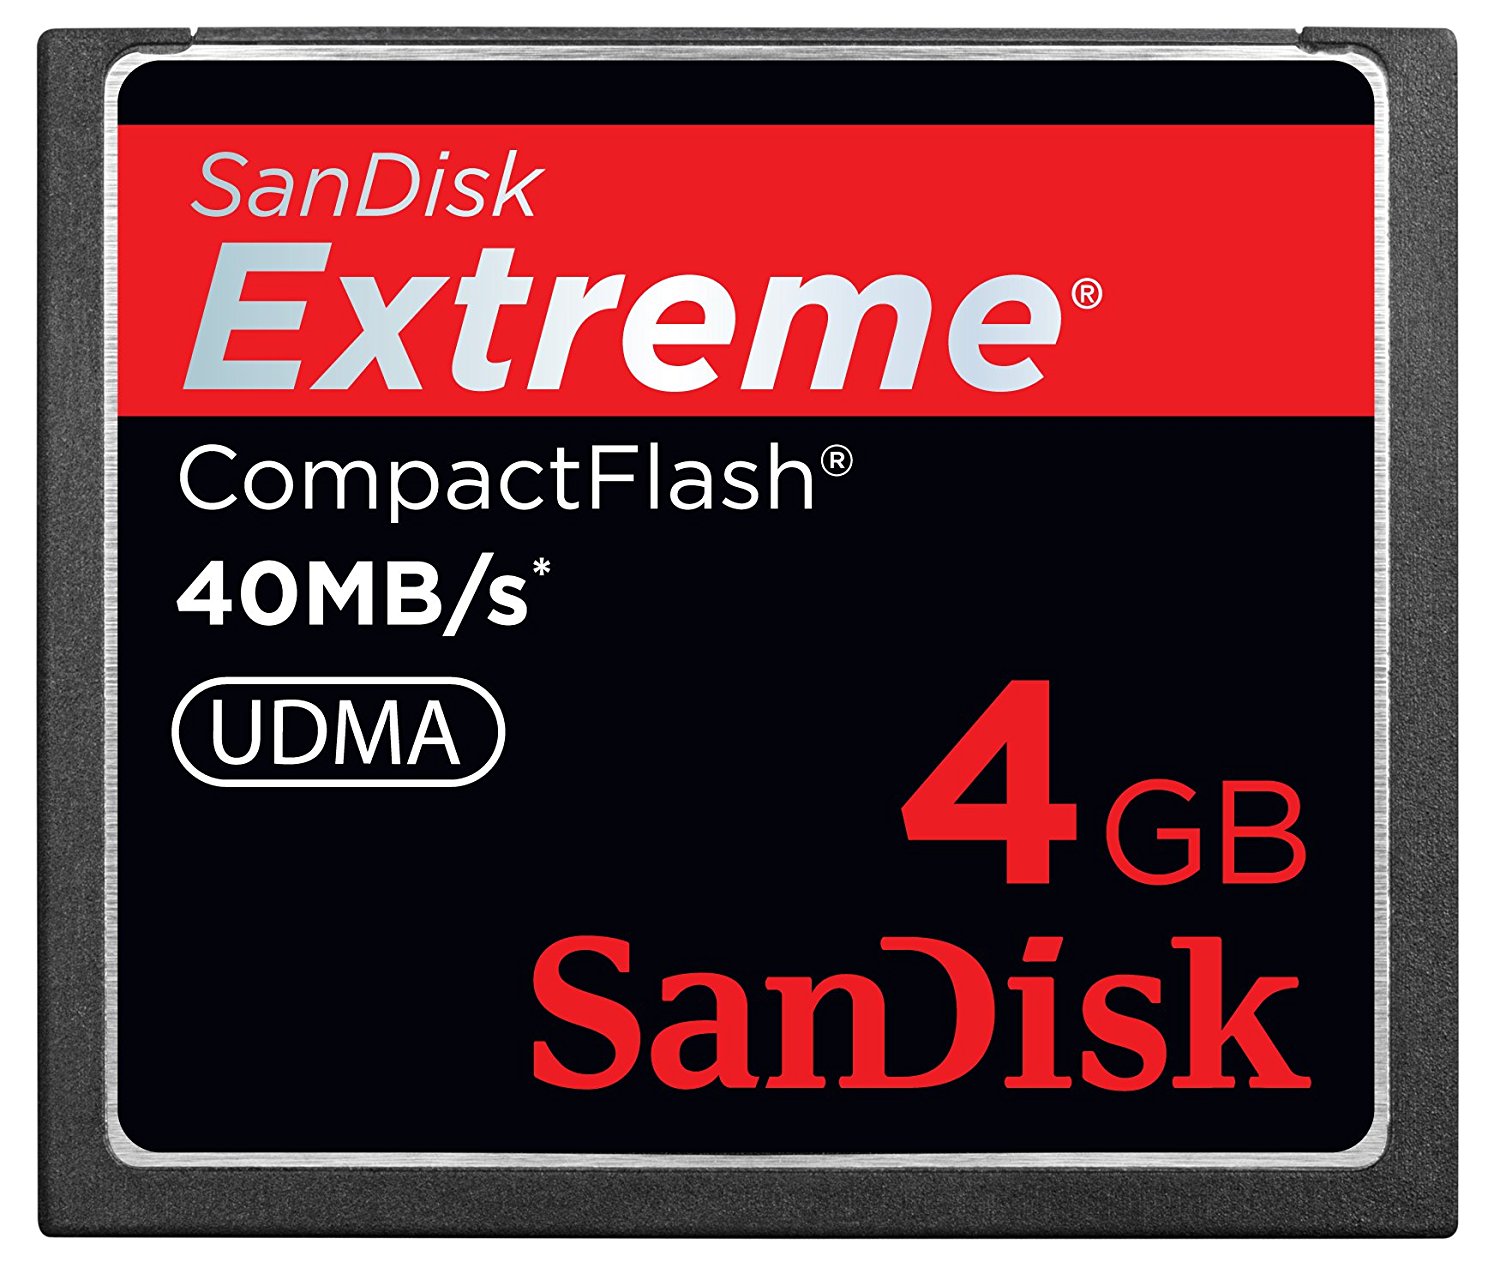 Amazon.com: SanDisk Extreme CompactFlash 4 GB Memory Card 40MB/s ...